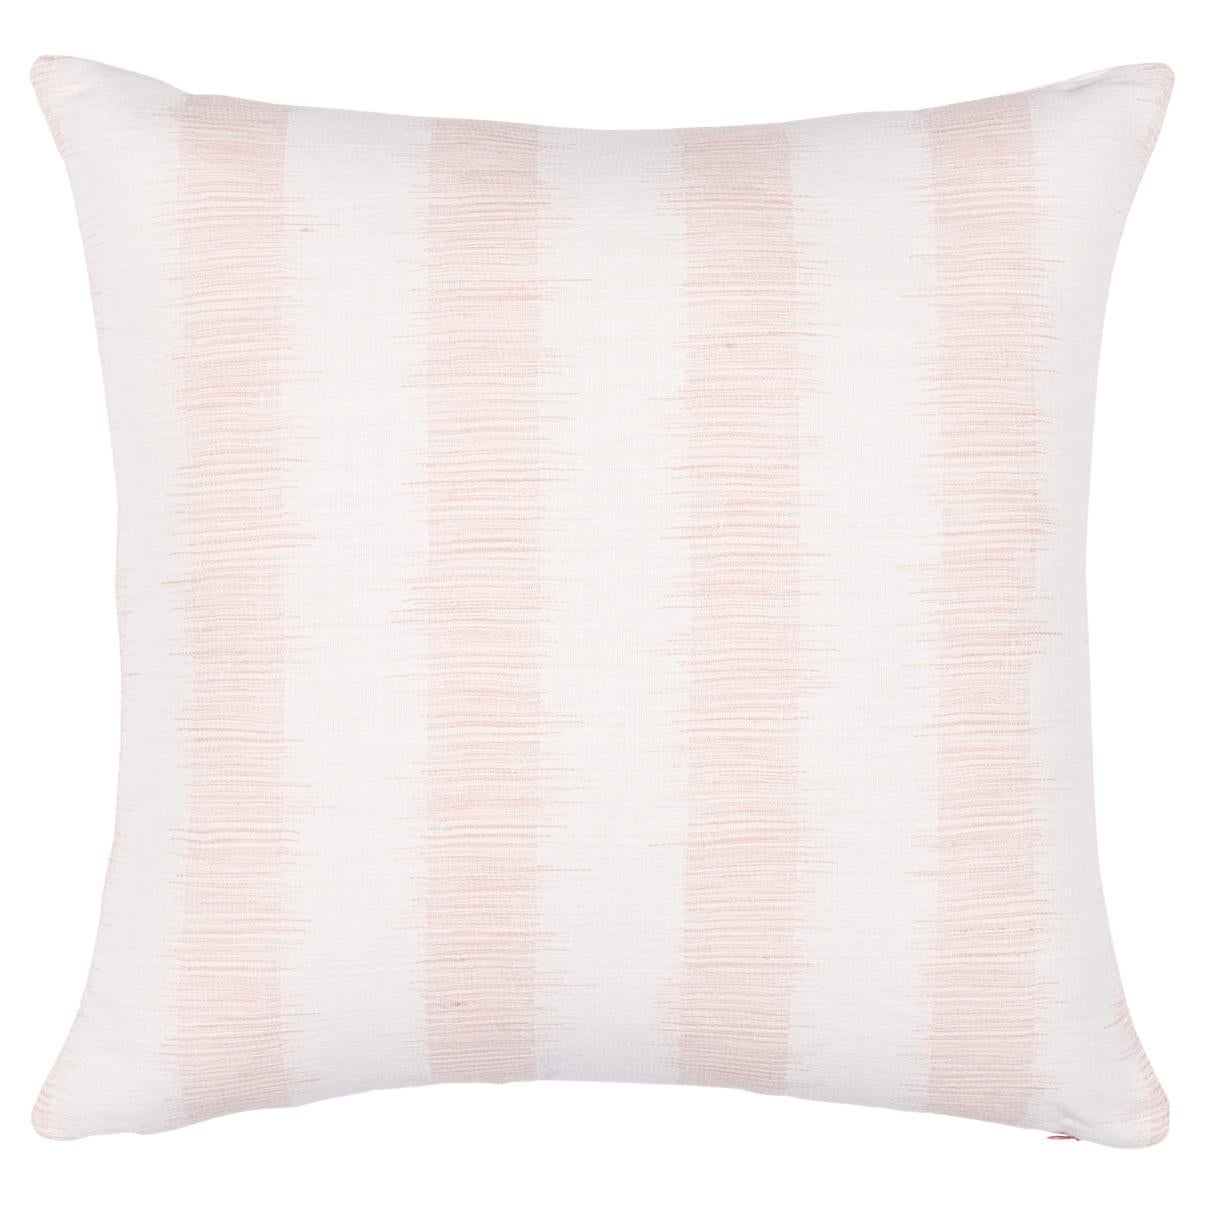 Schumacher Attleboro Ikat 22" Pillow in Blush For Sale